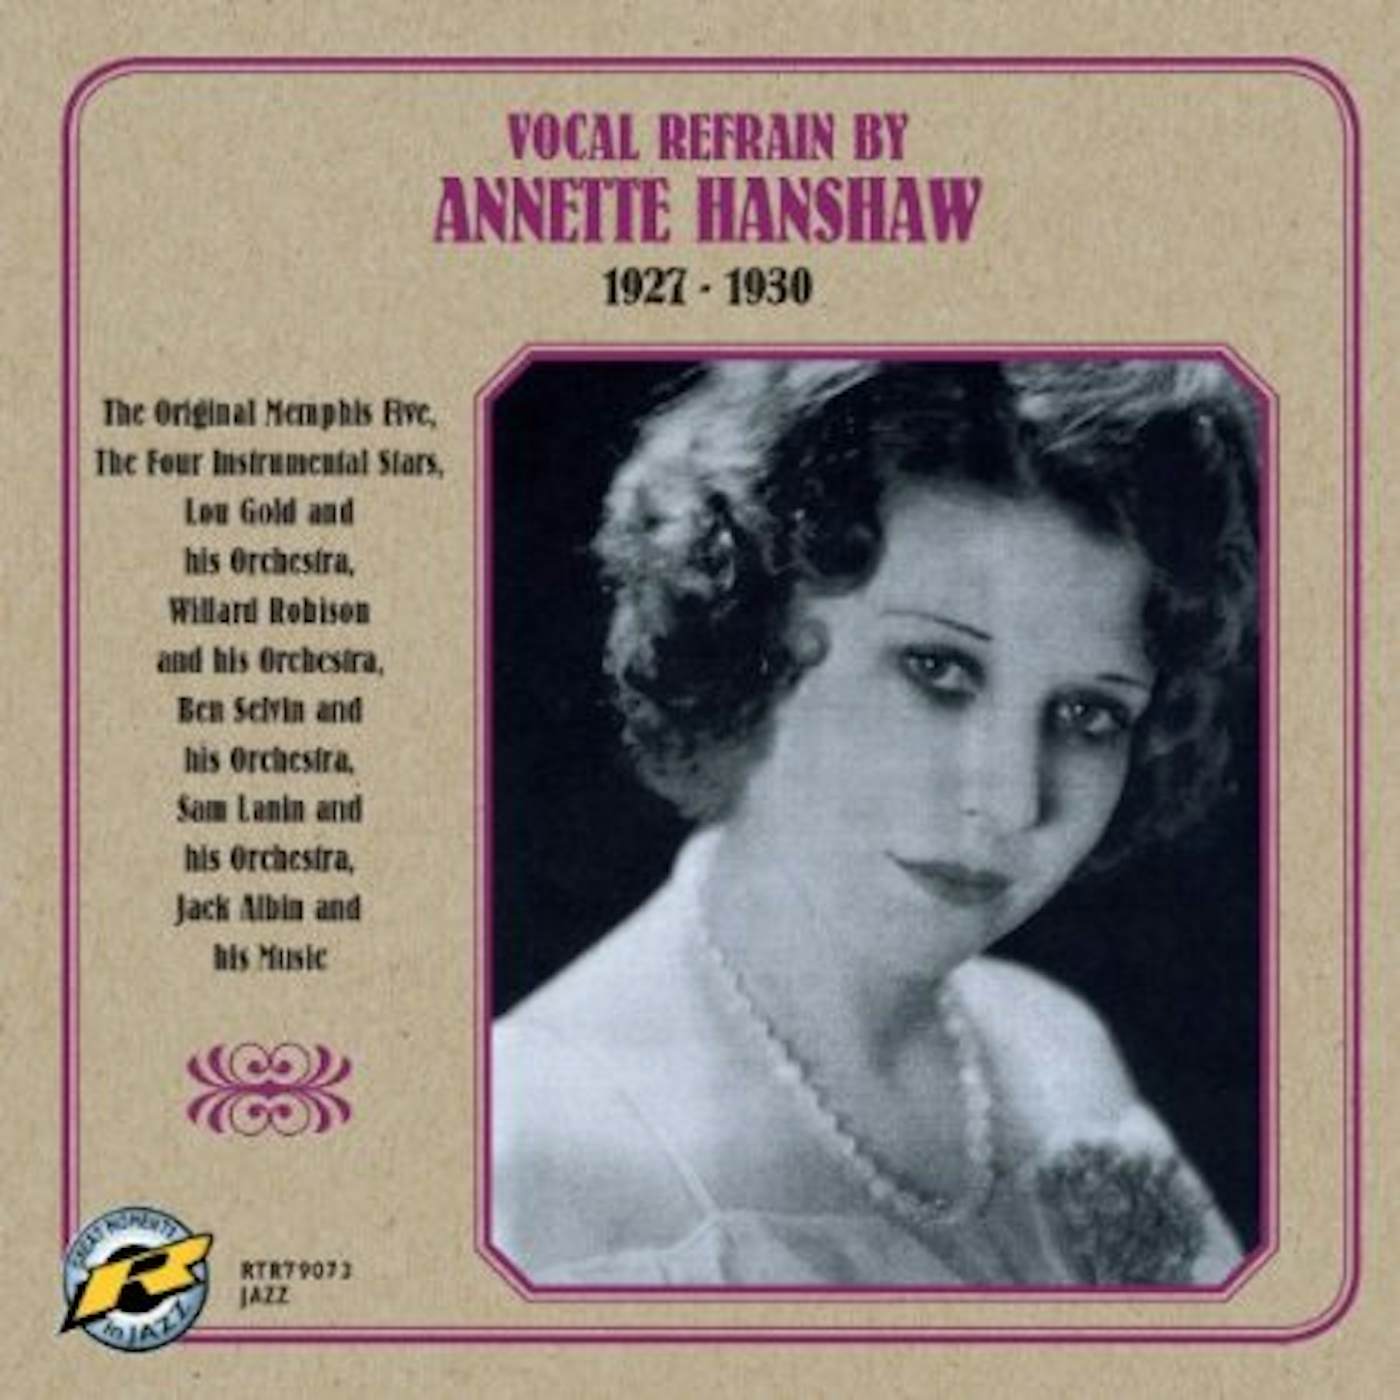 Annette Hanshaw VOCAL REFRAIN CD